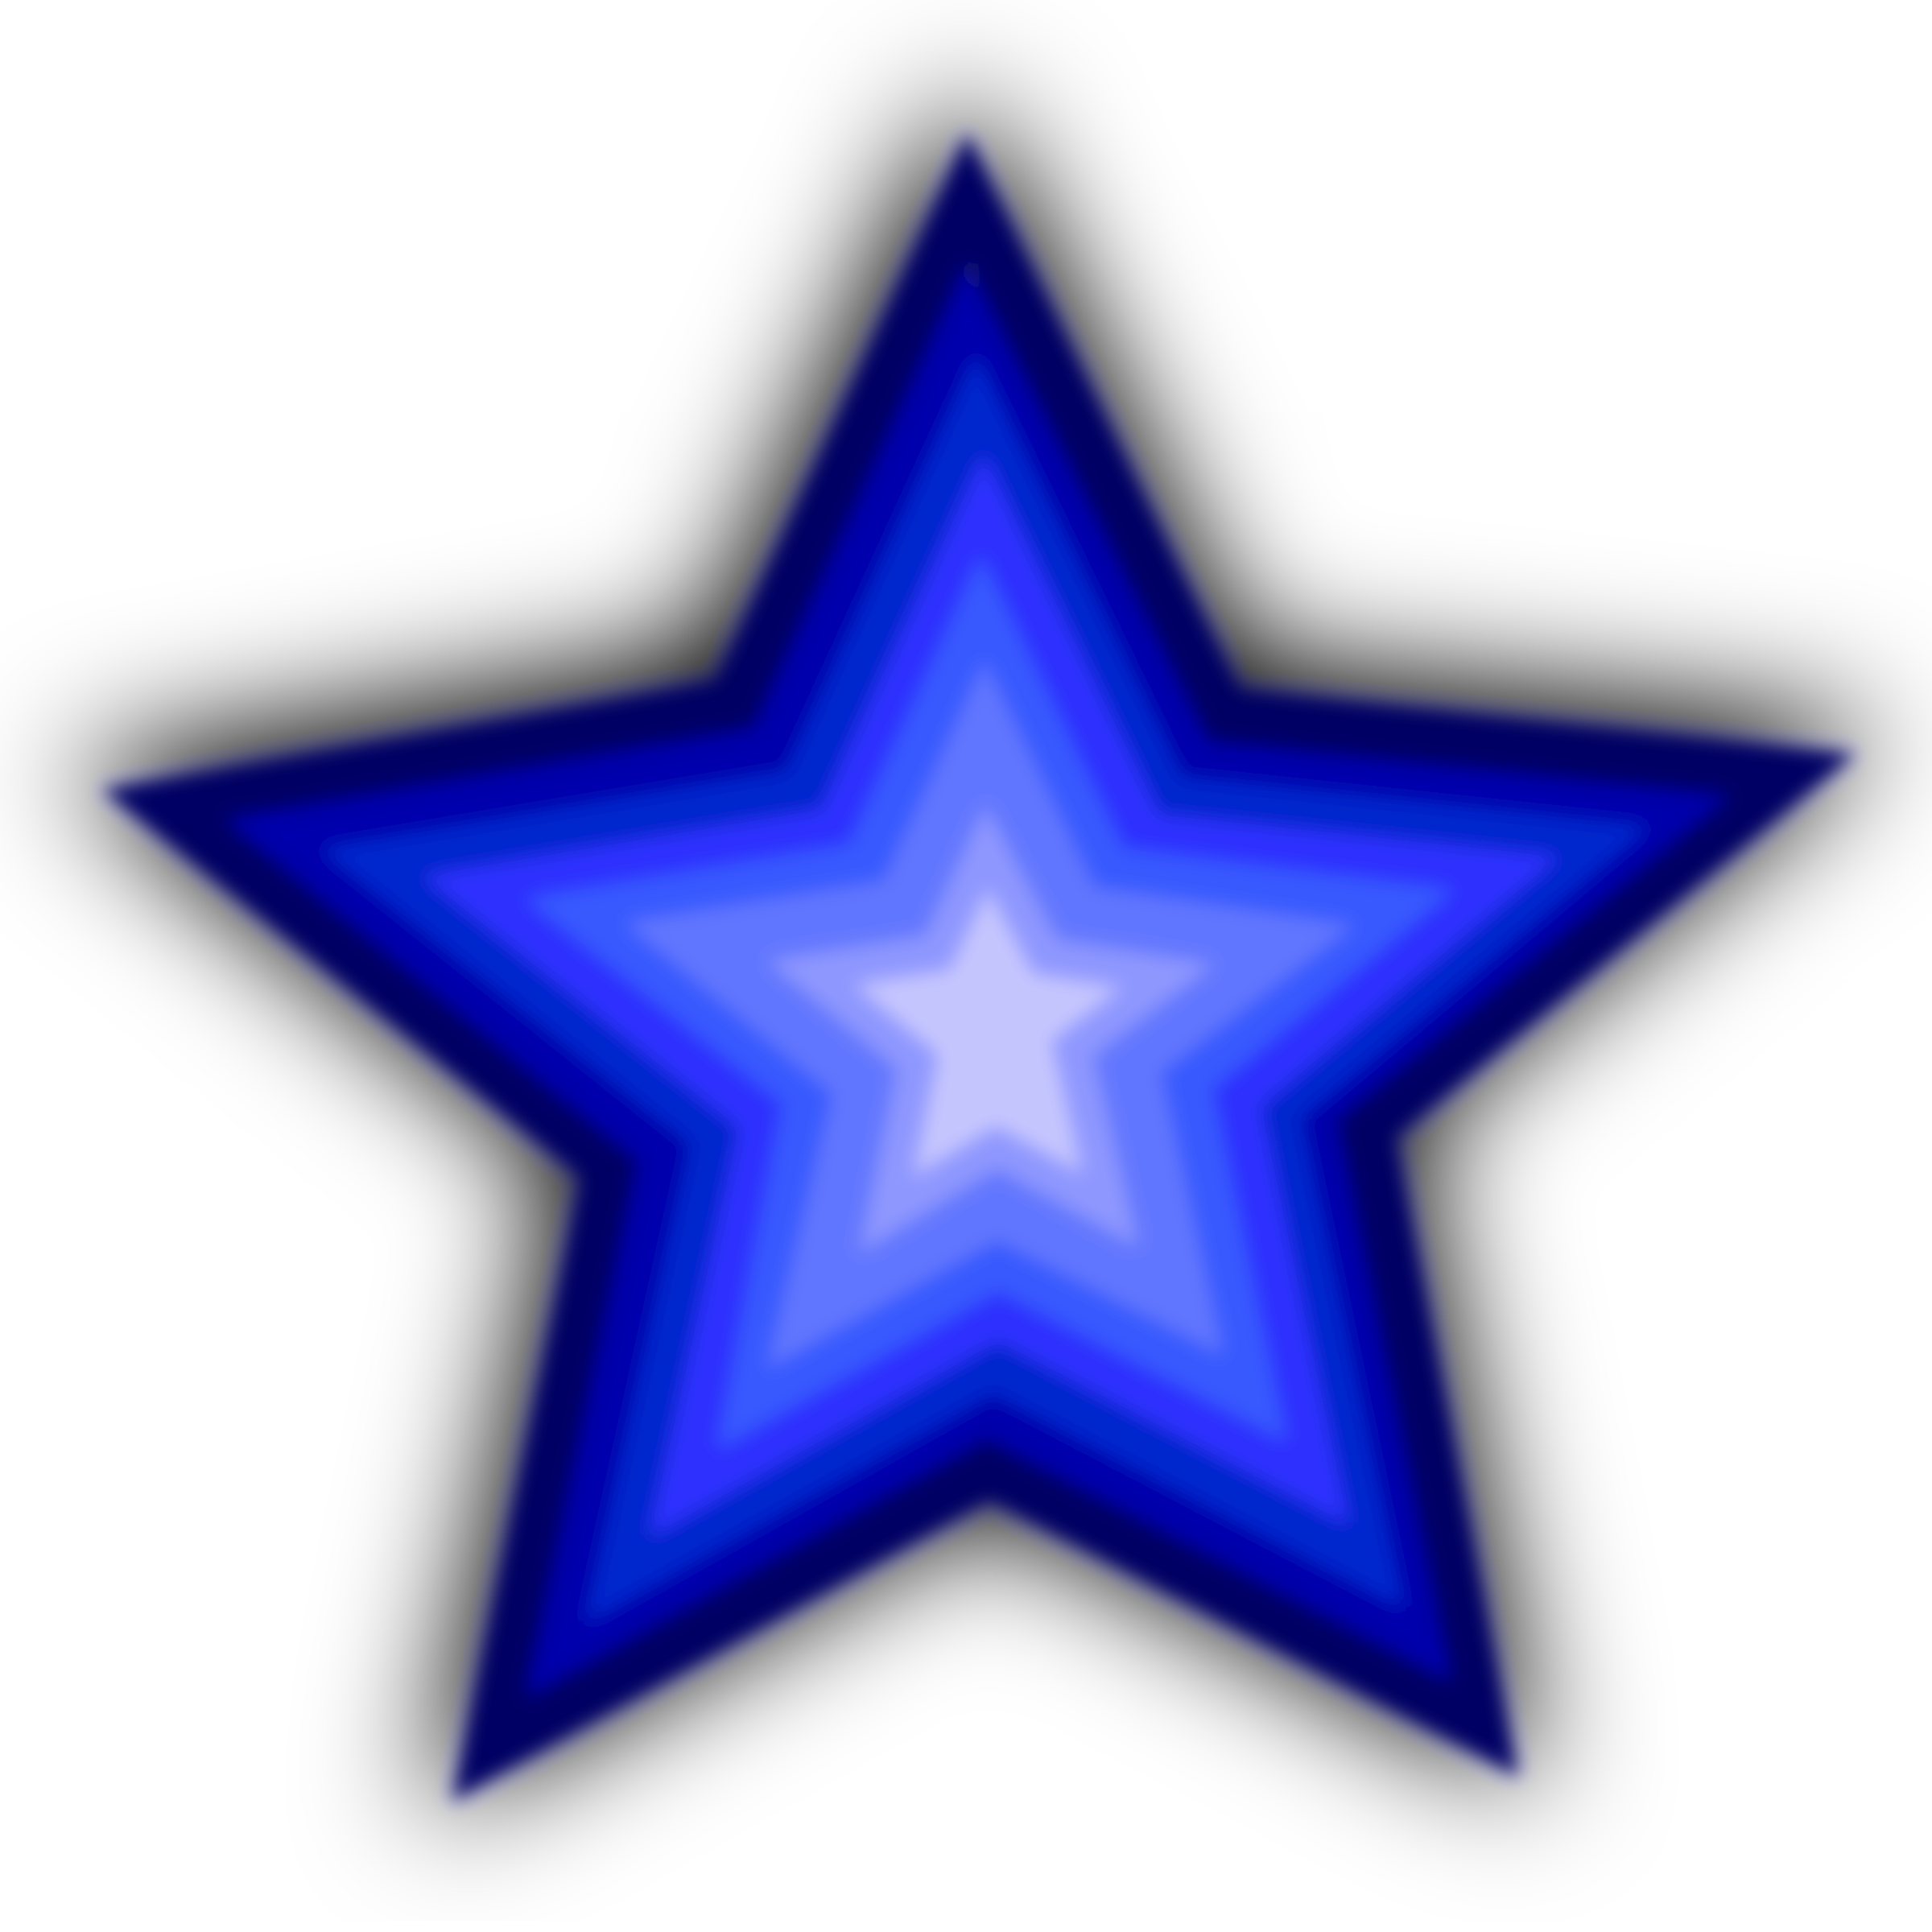 clipart star simple